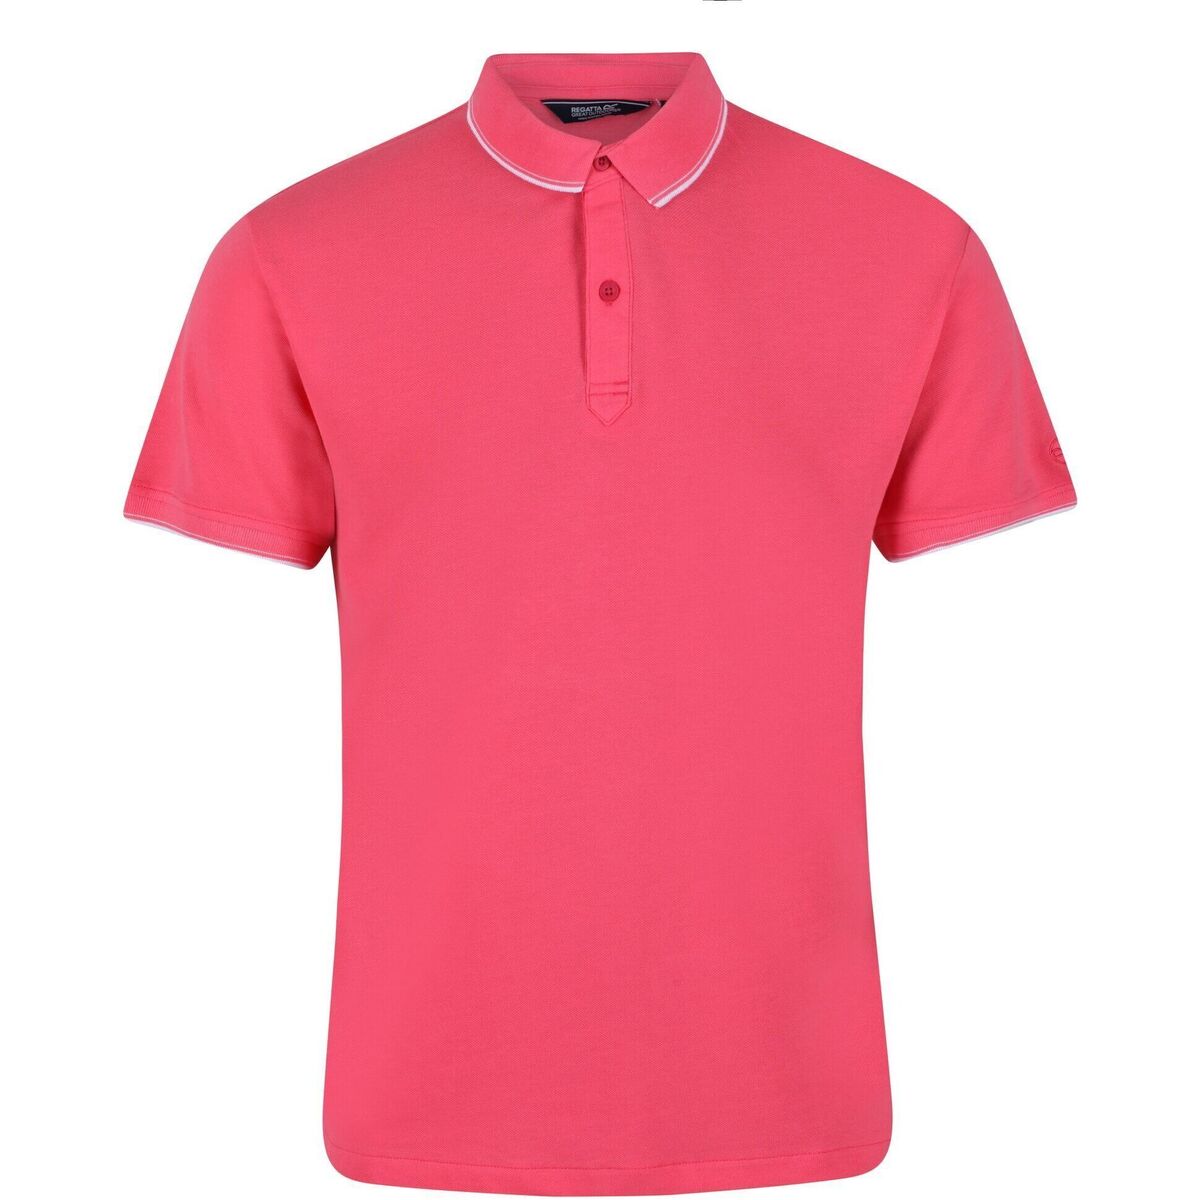 Vêtements Homme Ermenegildo Zegna long-sleeved burnout polo shirt  Rouge